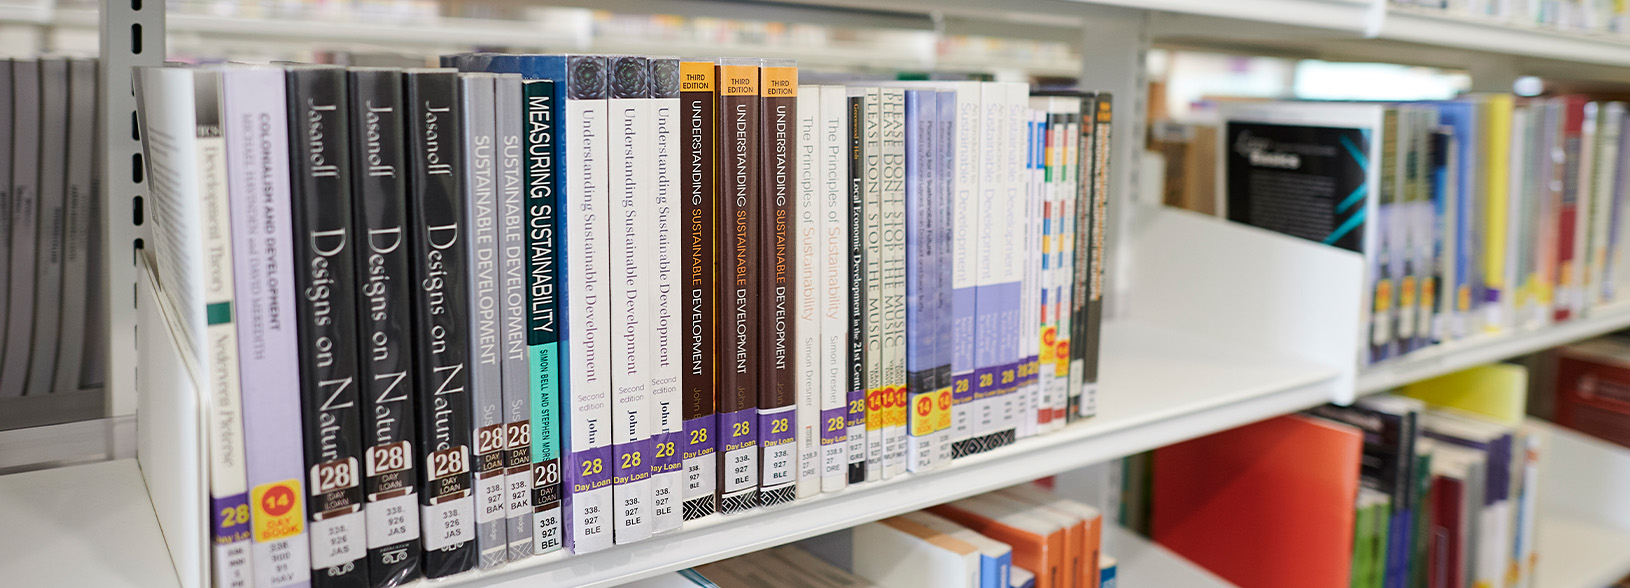 Shelf of library books